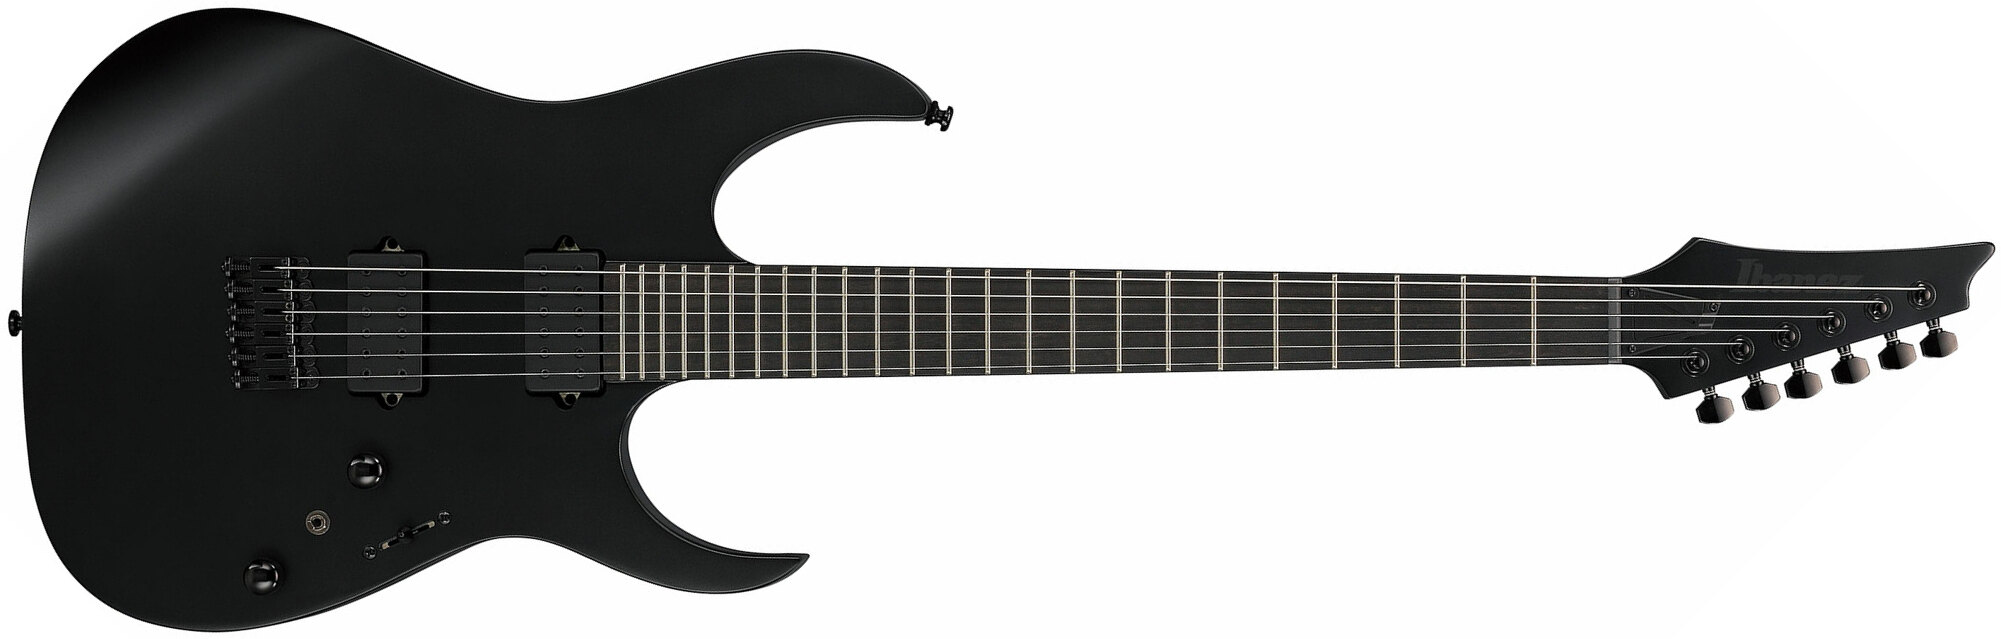 Ibanez Rgrtb621 Bkf Axion Label Hh Dimarzio Ht Eb - Black Flat - E-Gitarre in Str-Form - Main picture